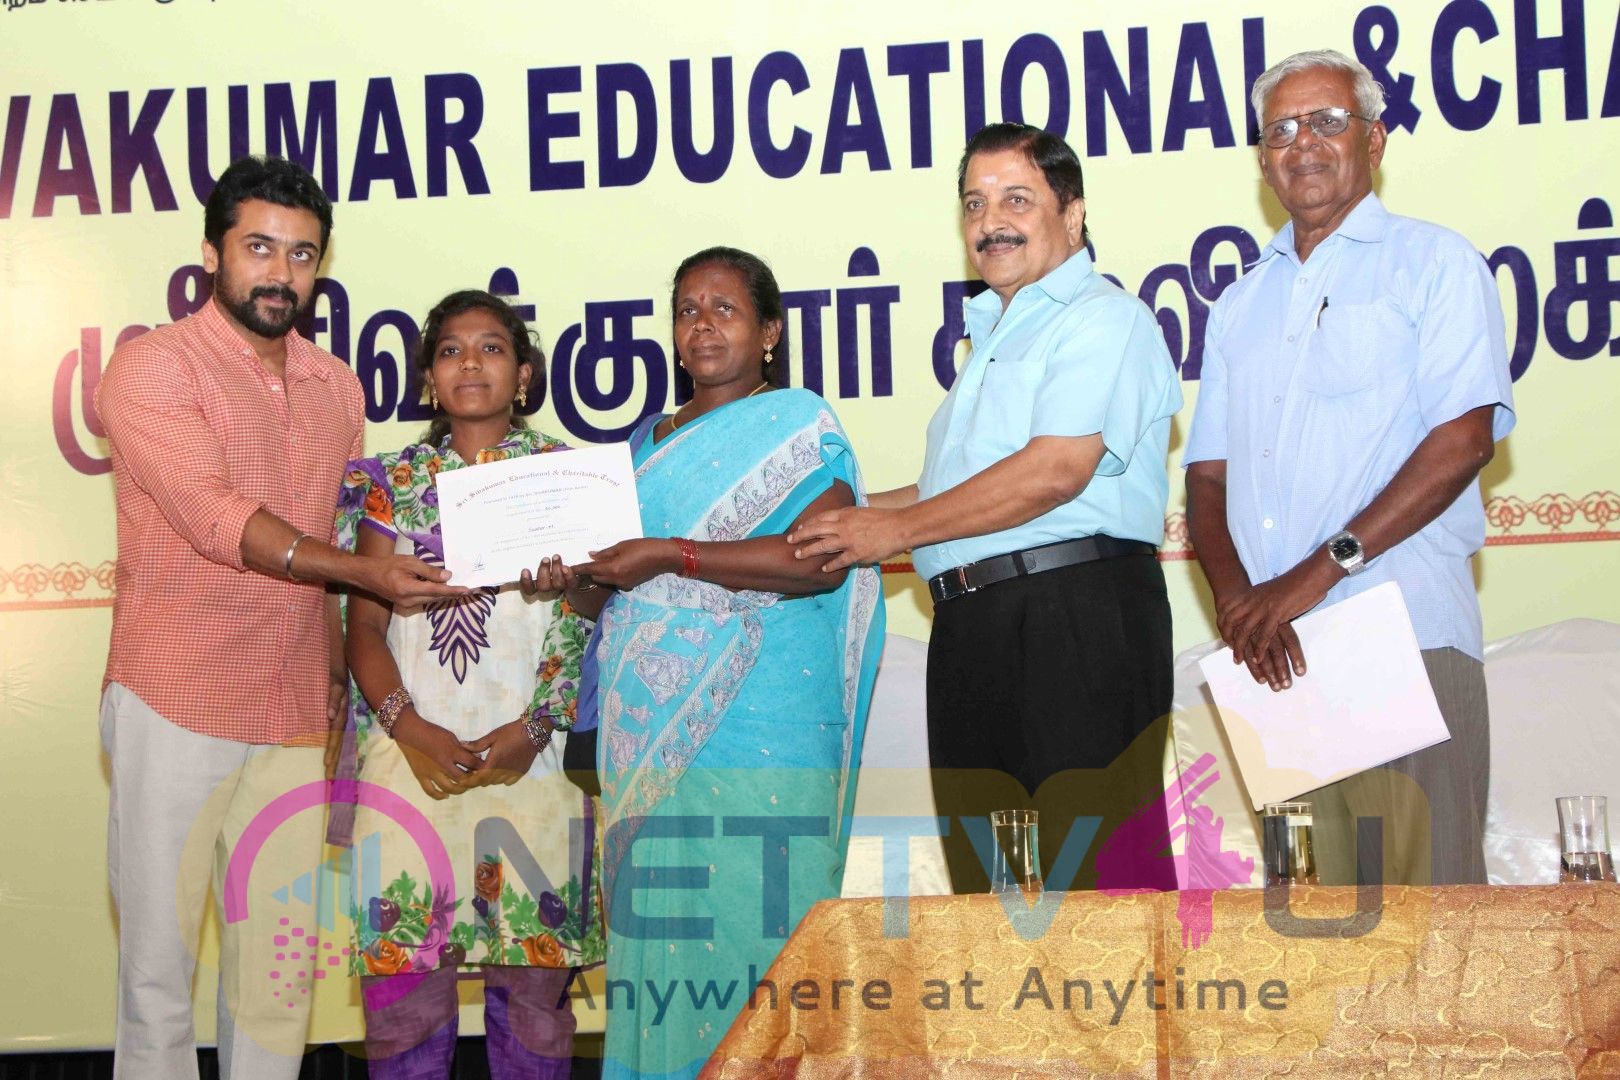  Sri Sivakumar Education Trust 39th Anniversary Function Images  Tamil Gallery